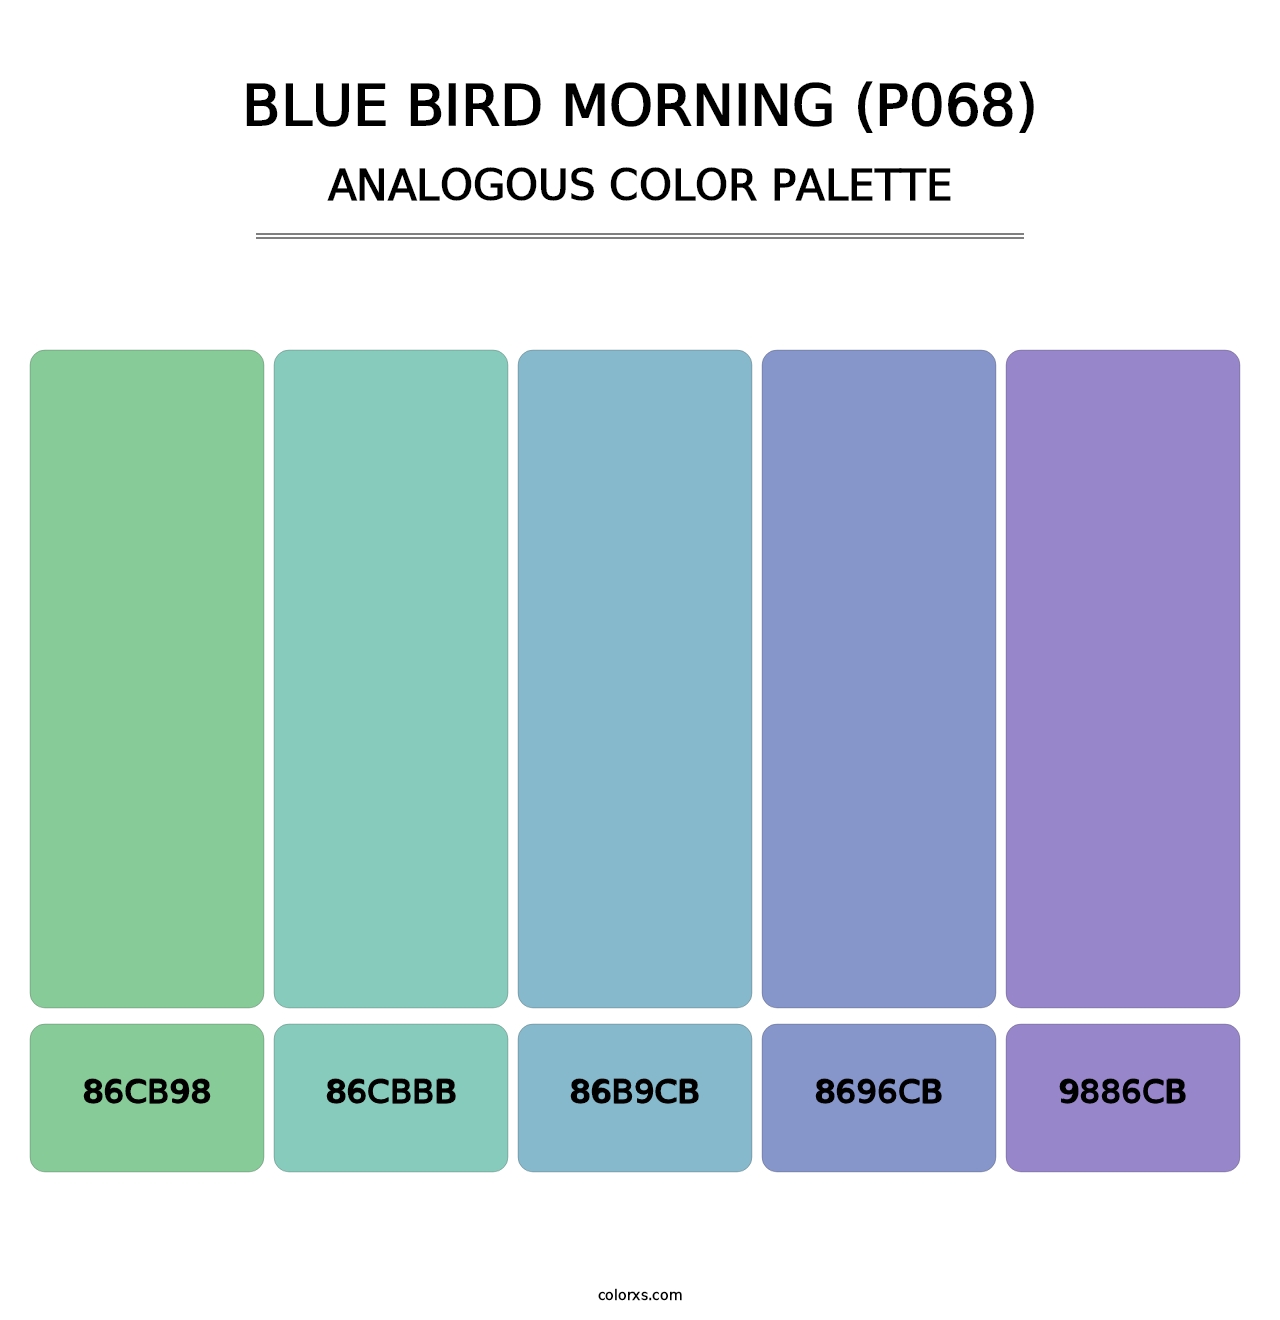 Blue Bird Morning (P068) - Analogous Color Palette